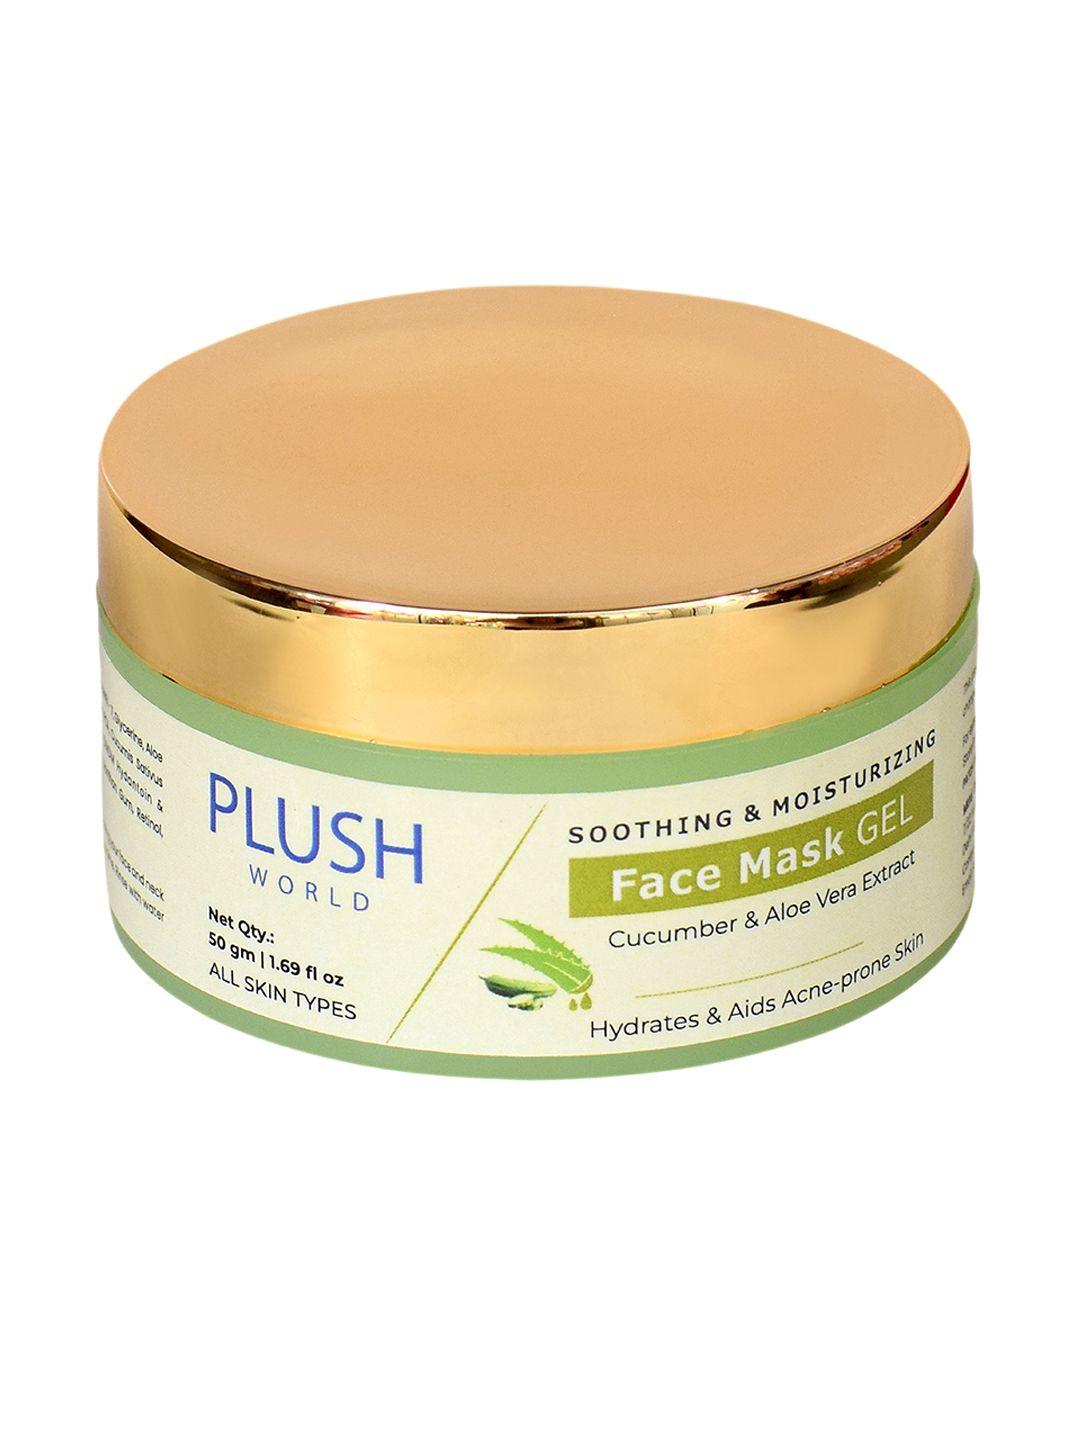 plush world soothing & moisturizing face mask gel with cucumber & aloe vera extract - 50 g